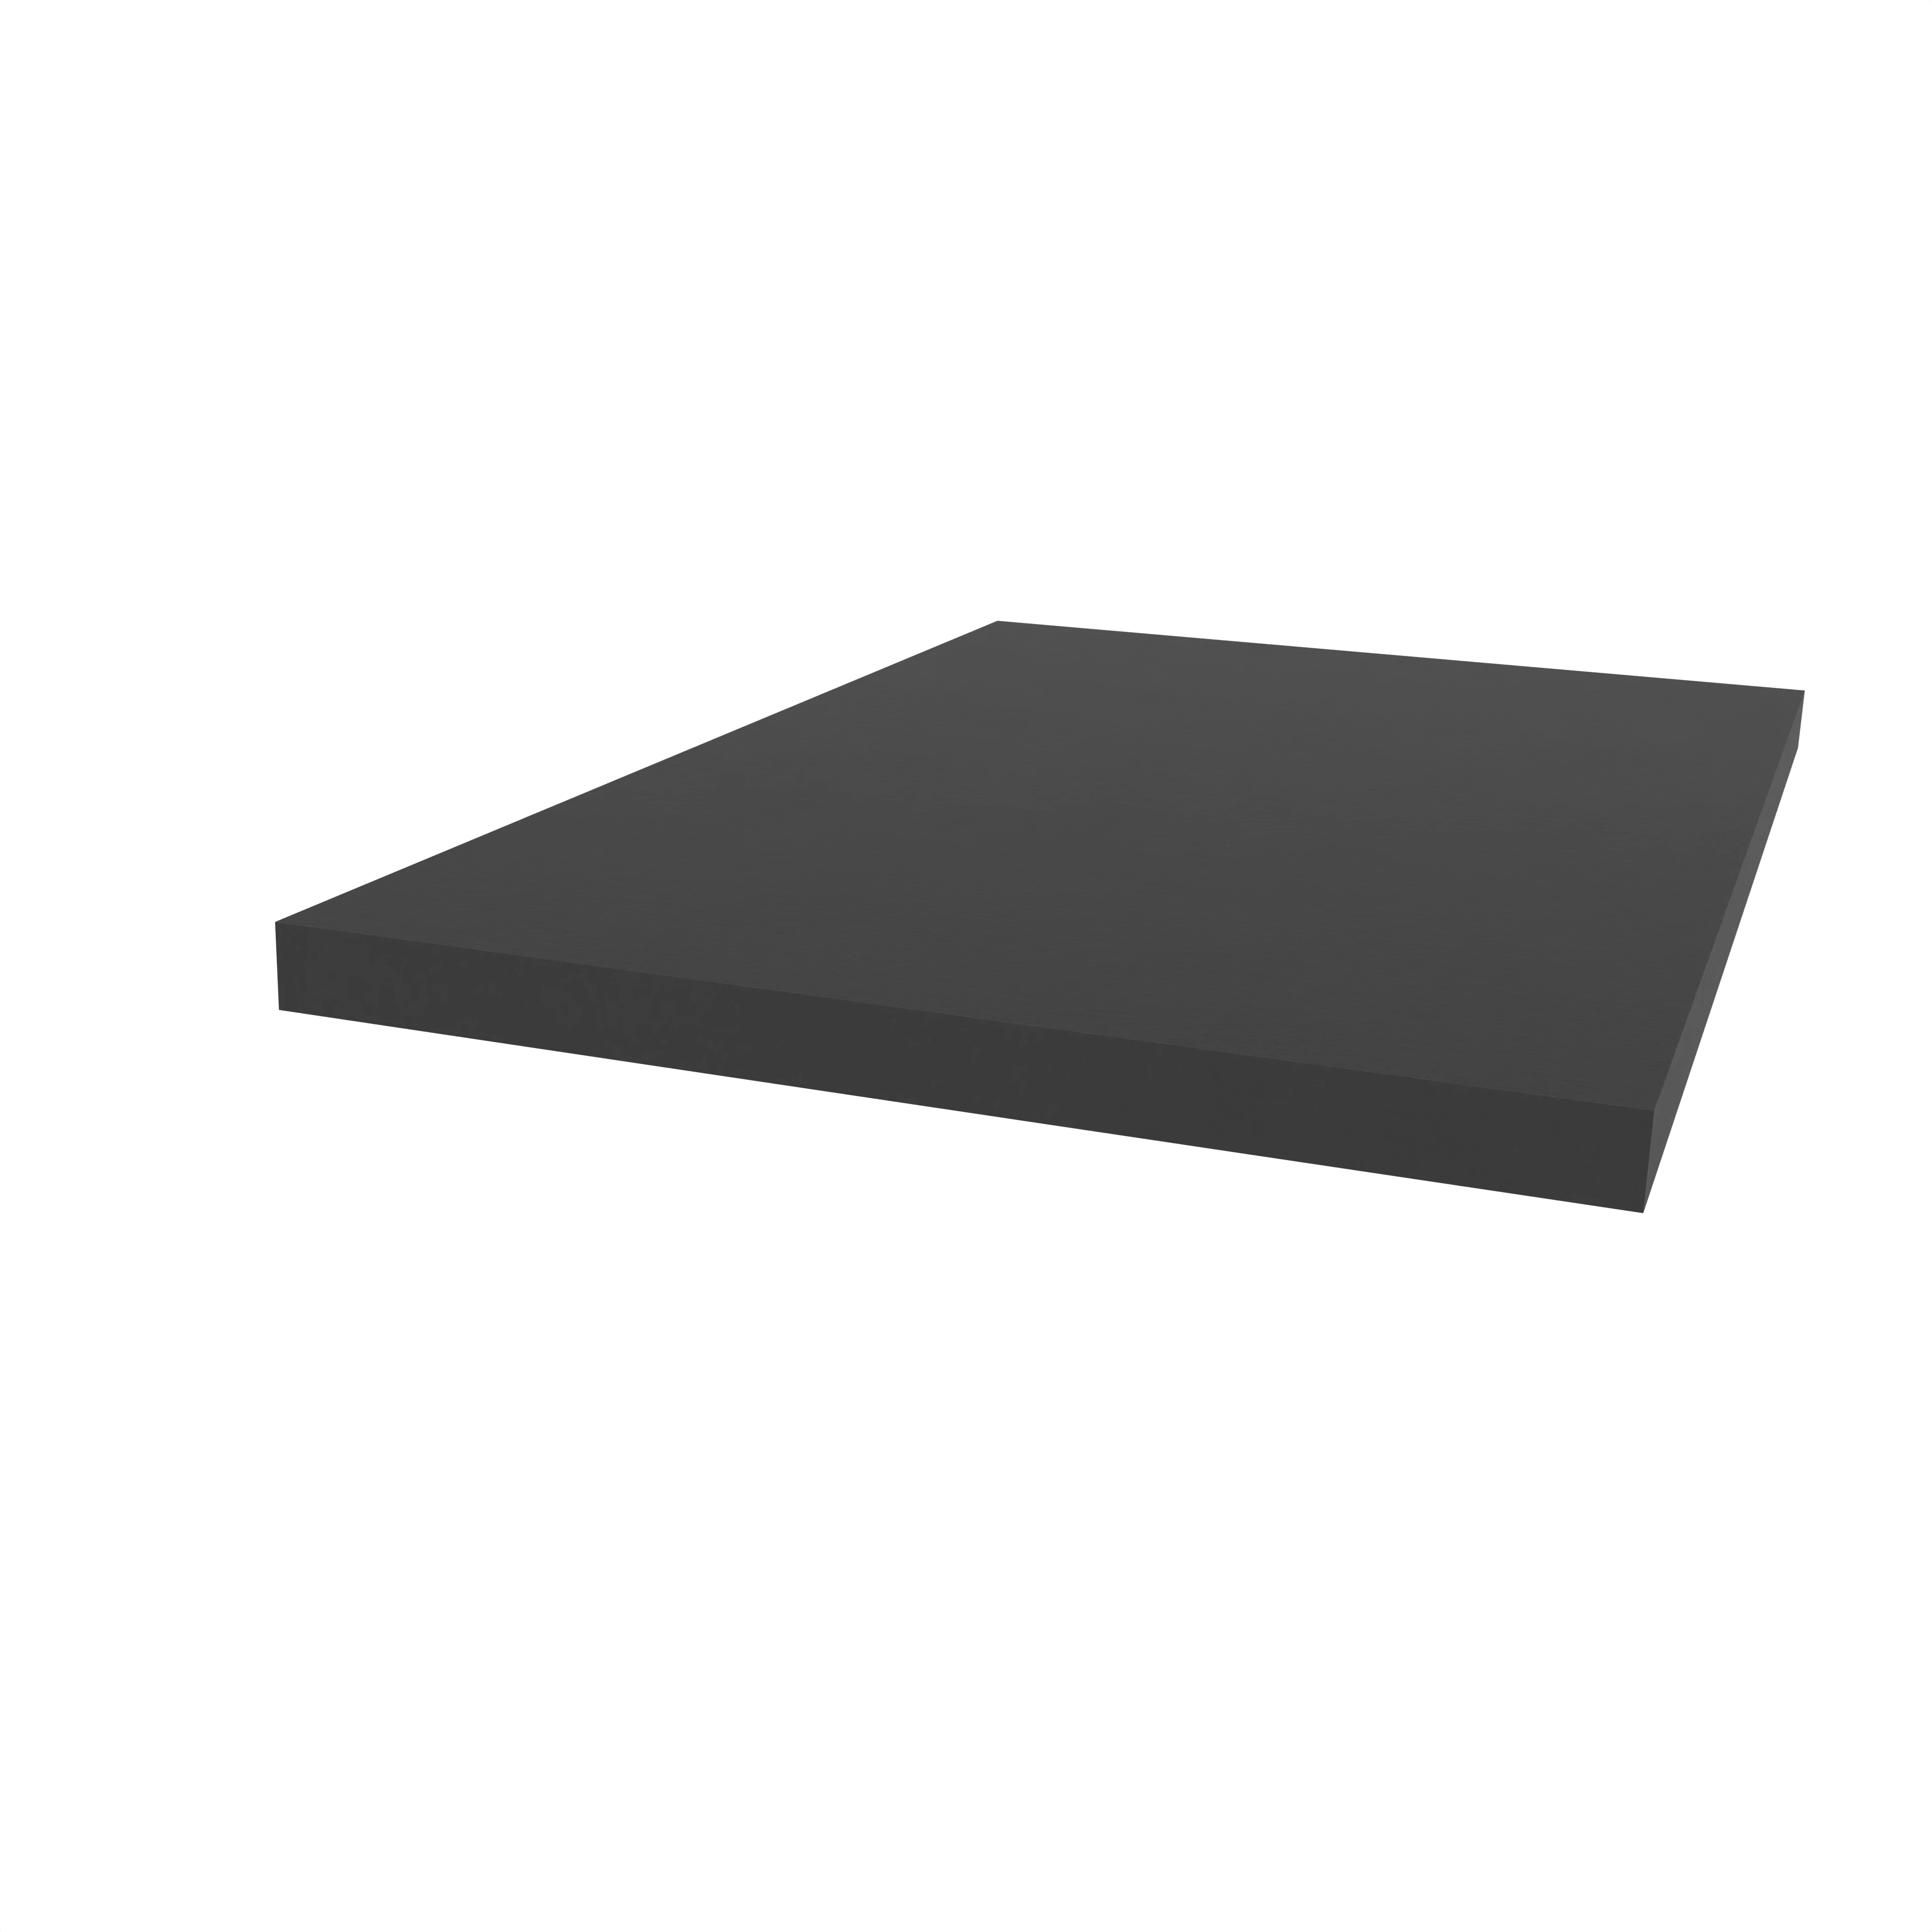 Moosgummidichtung vierkant | 3 mm Höhe | Farbe: schwarz